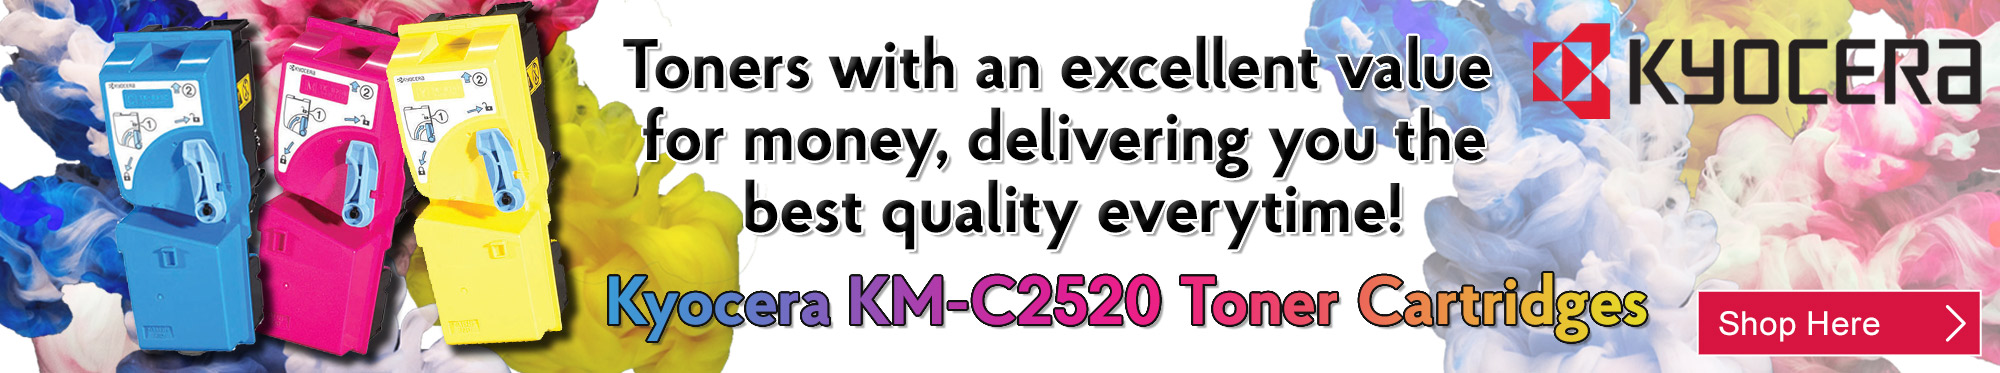 Kyocera KM-C2520 Toner Cartridges